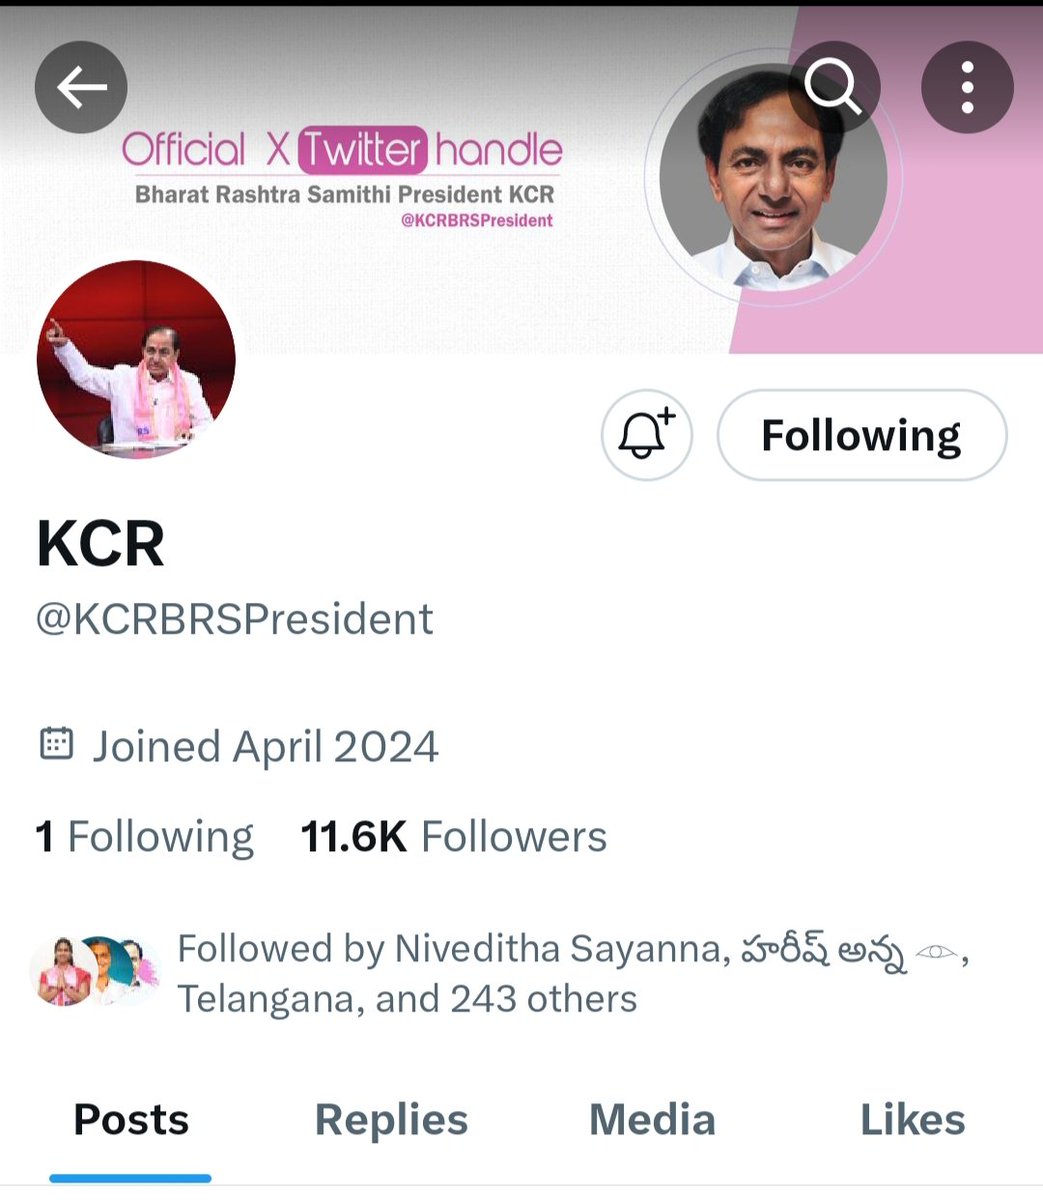 KCR’s Official Twitter Account
@KCRBRSPresident